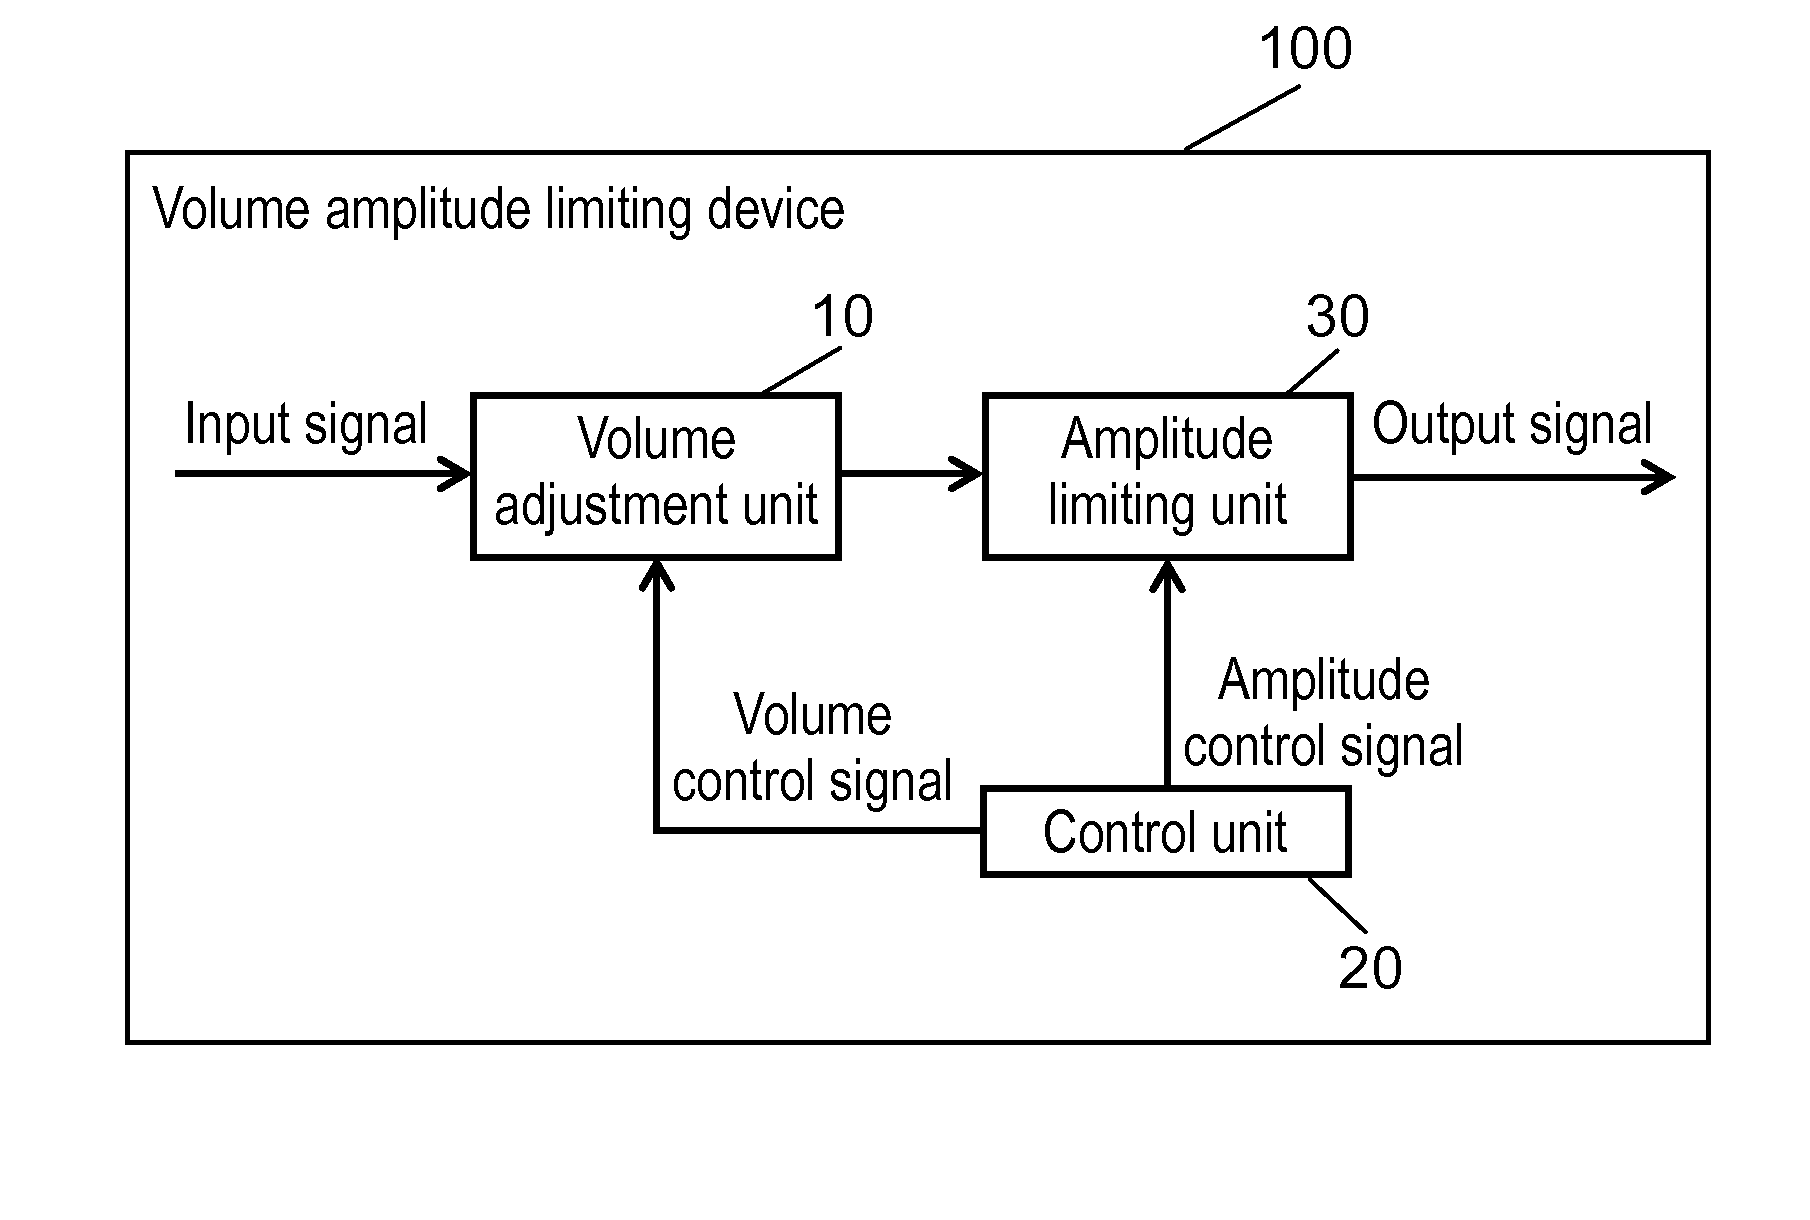 Volume amplitude limiting device